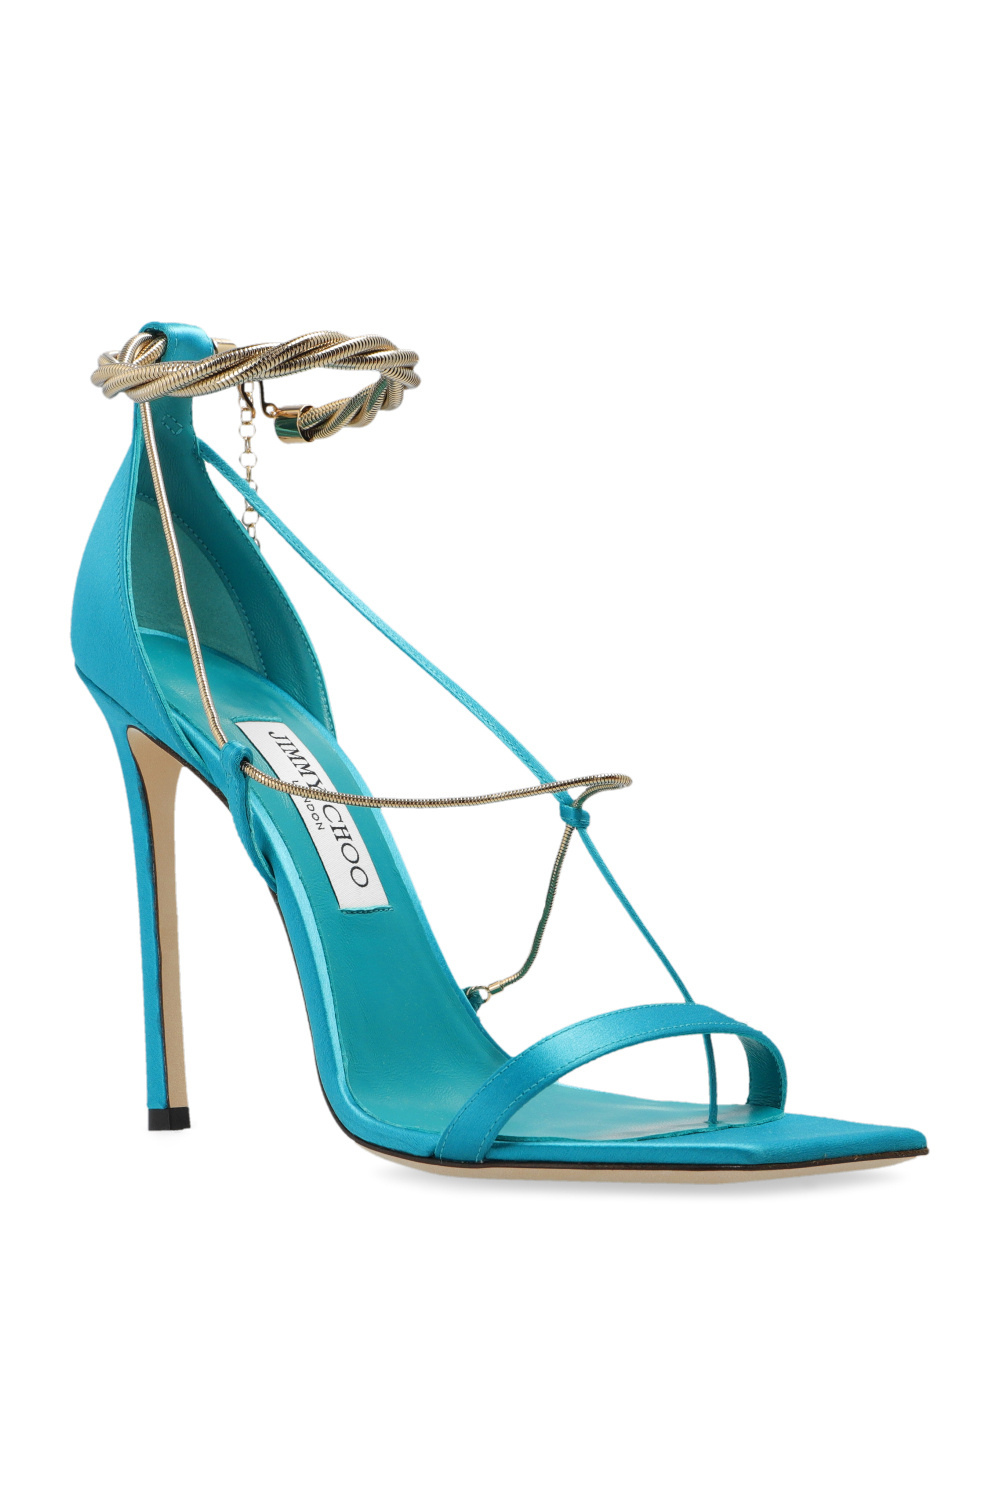 Jimmy Choo ‘Oriana’ heeled sandals